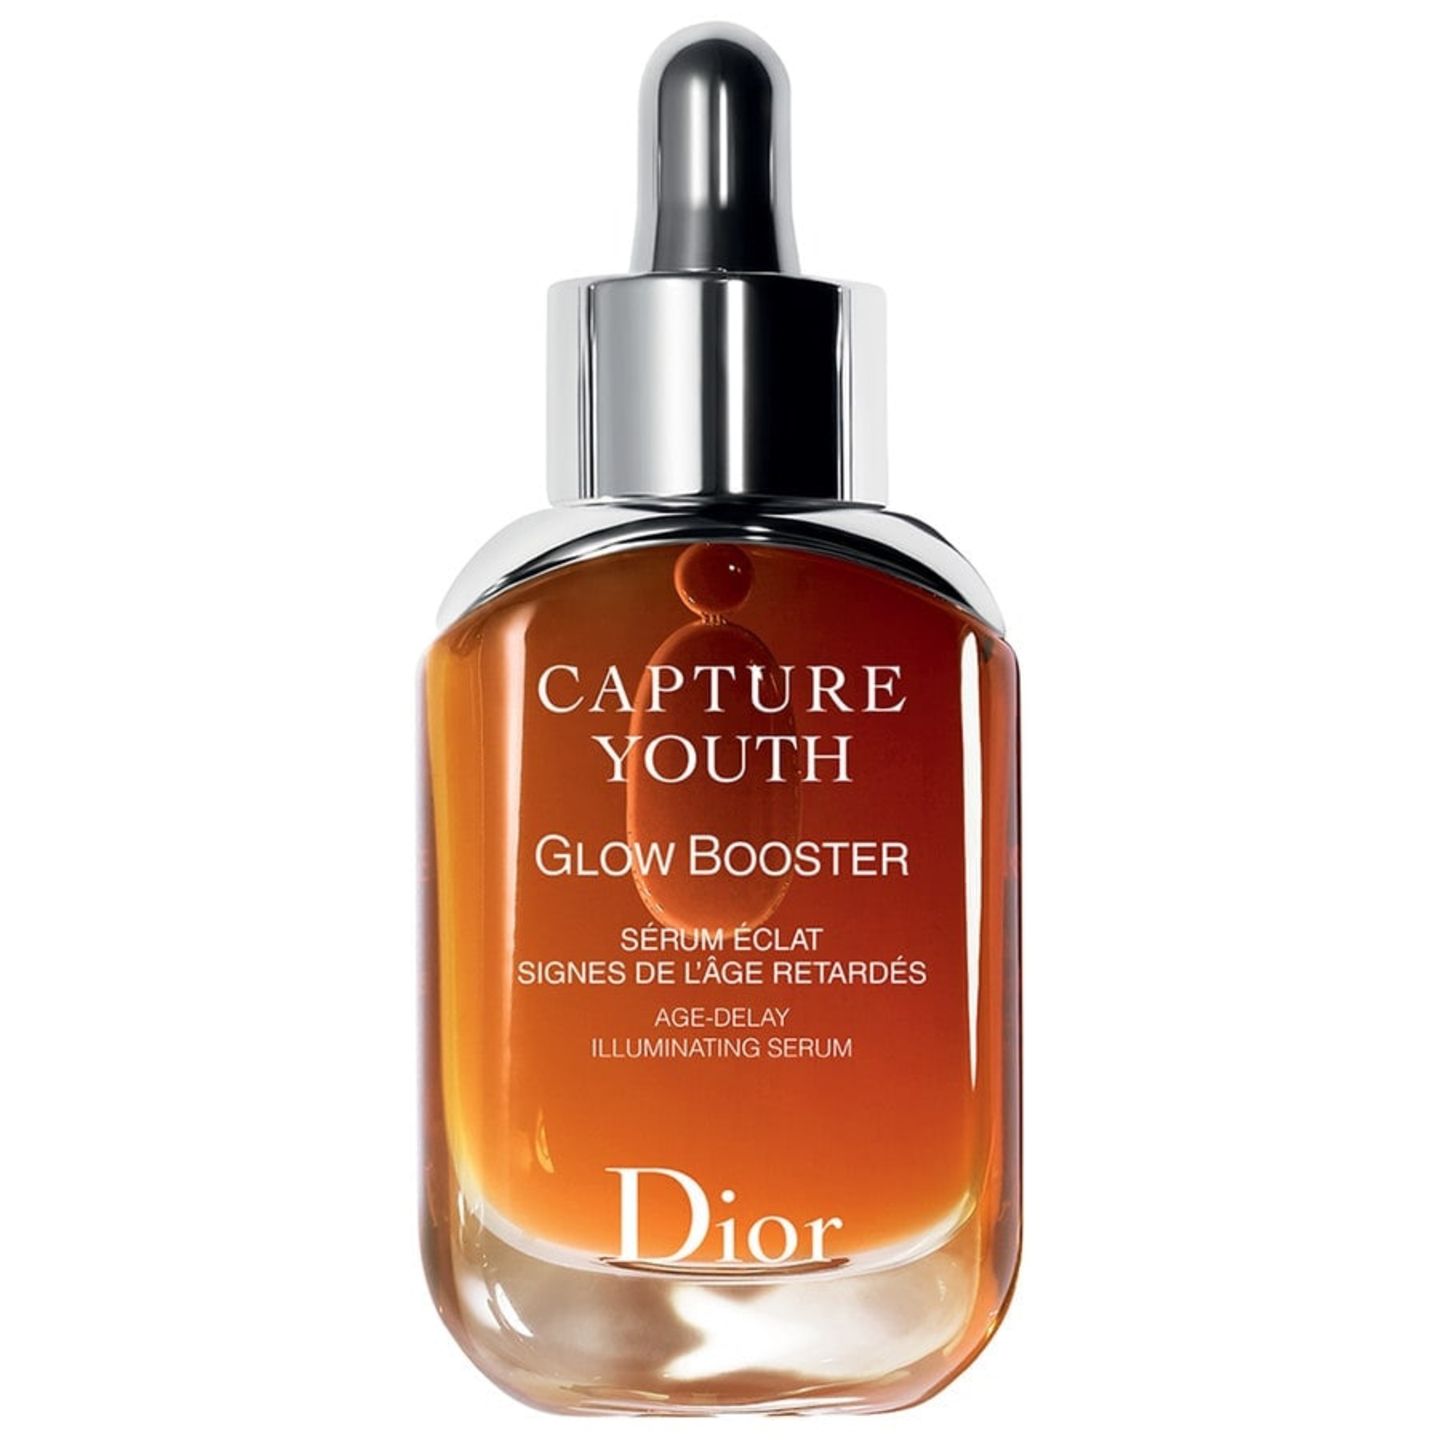 Capture YouthGlow Booster Age-Delay illuminating Serum - Dior